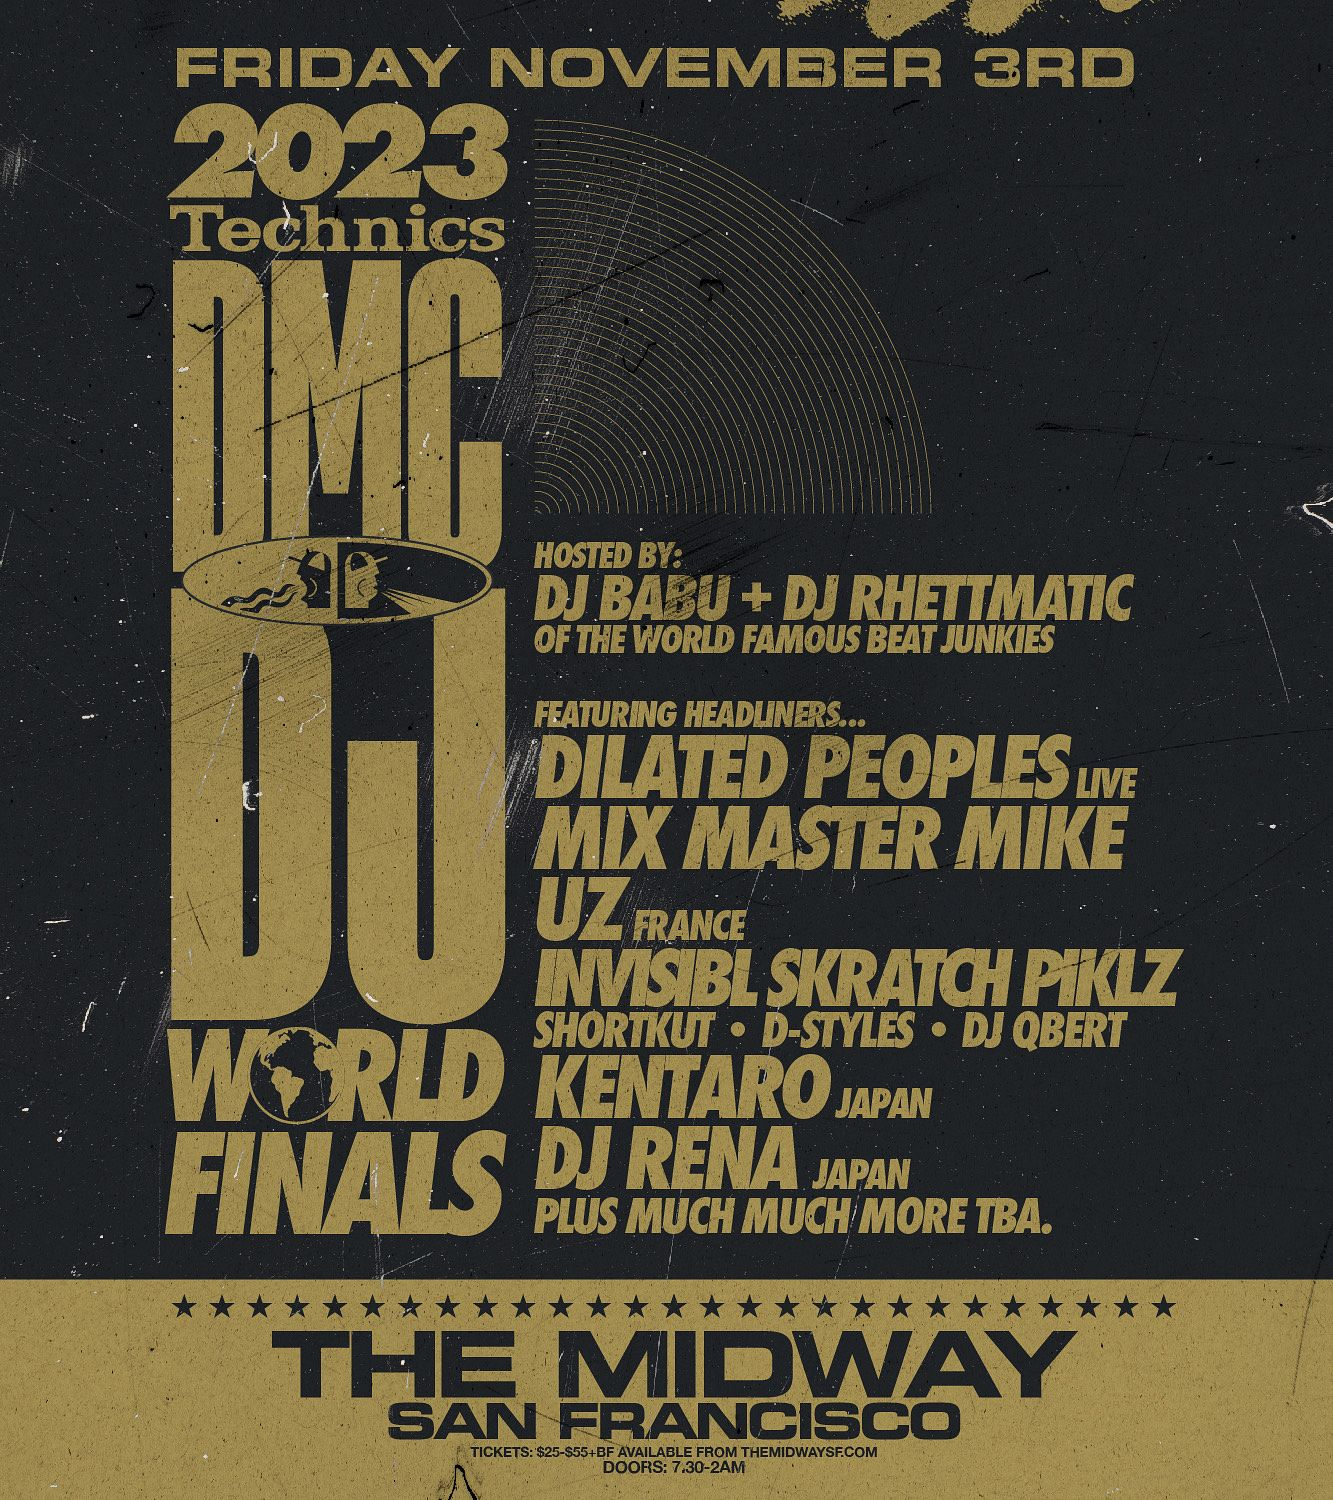 2023 Technics DMC DJ World Finals